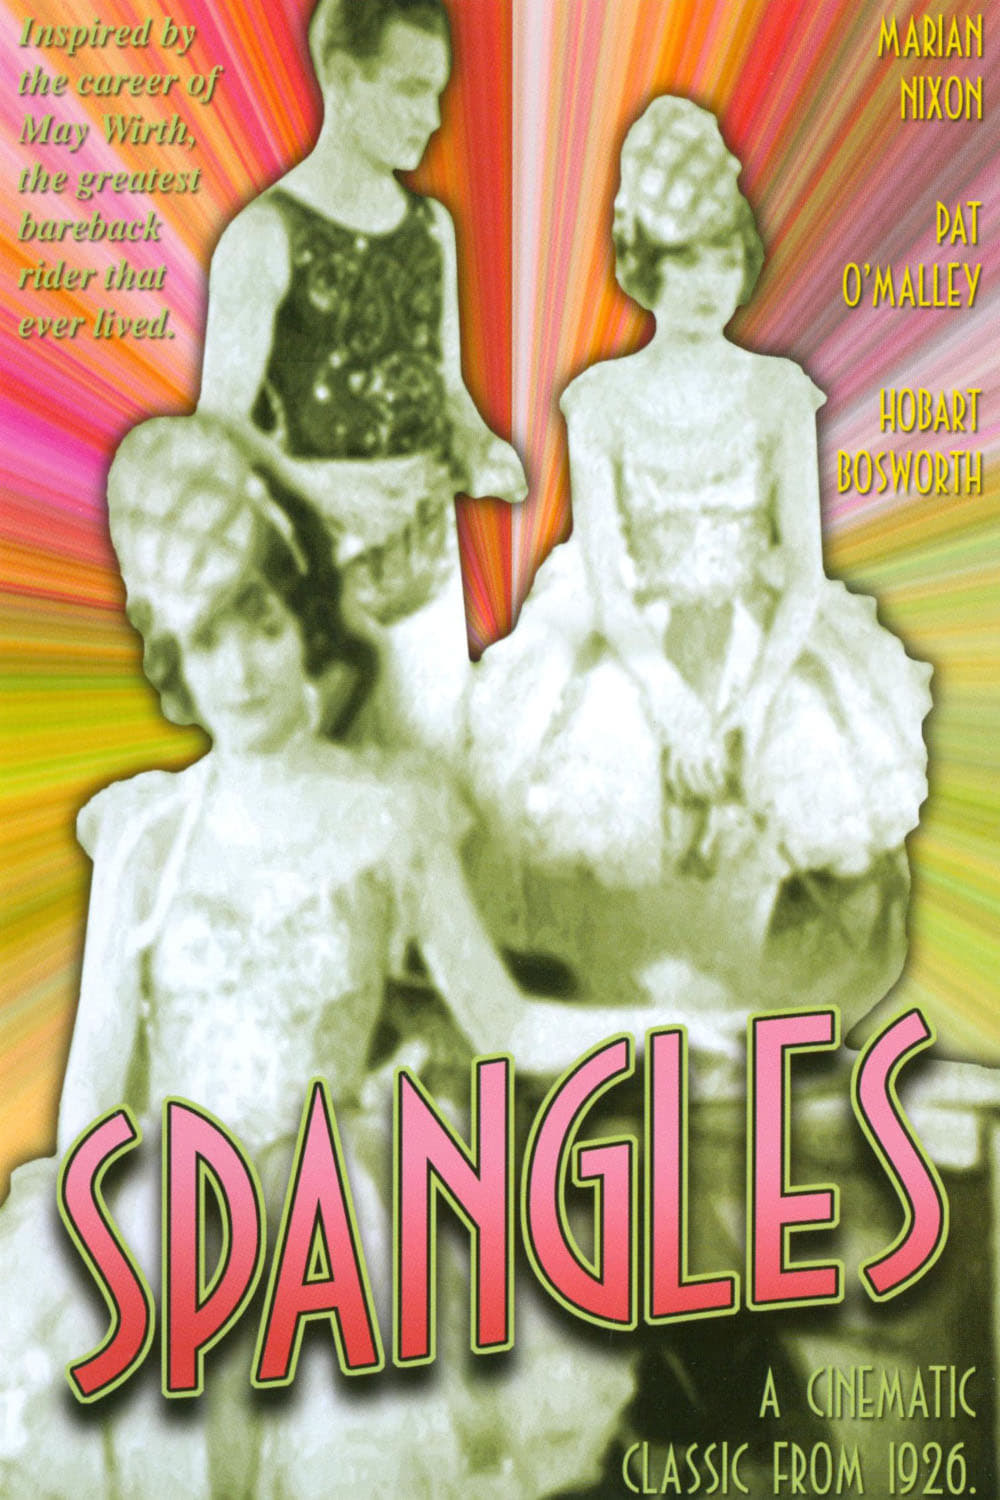 Spangles (1926)